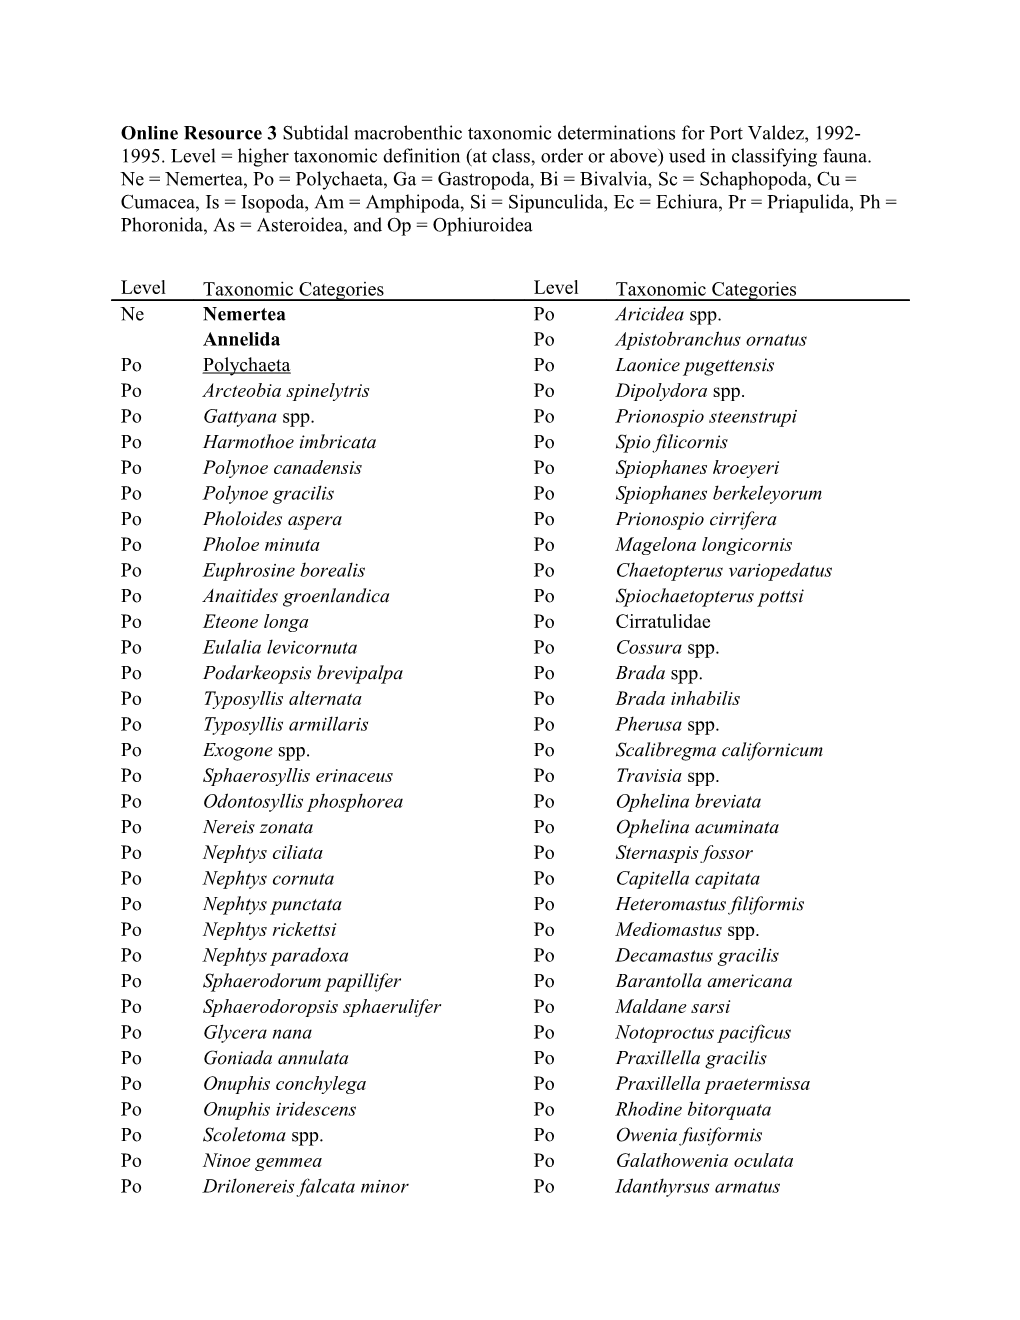 Online Resource 3 Subtidal Macrobenthic Taxonomic Determinations for Port Valdez, 1992-1995